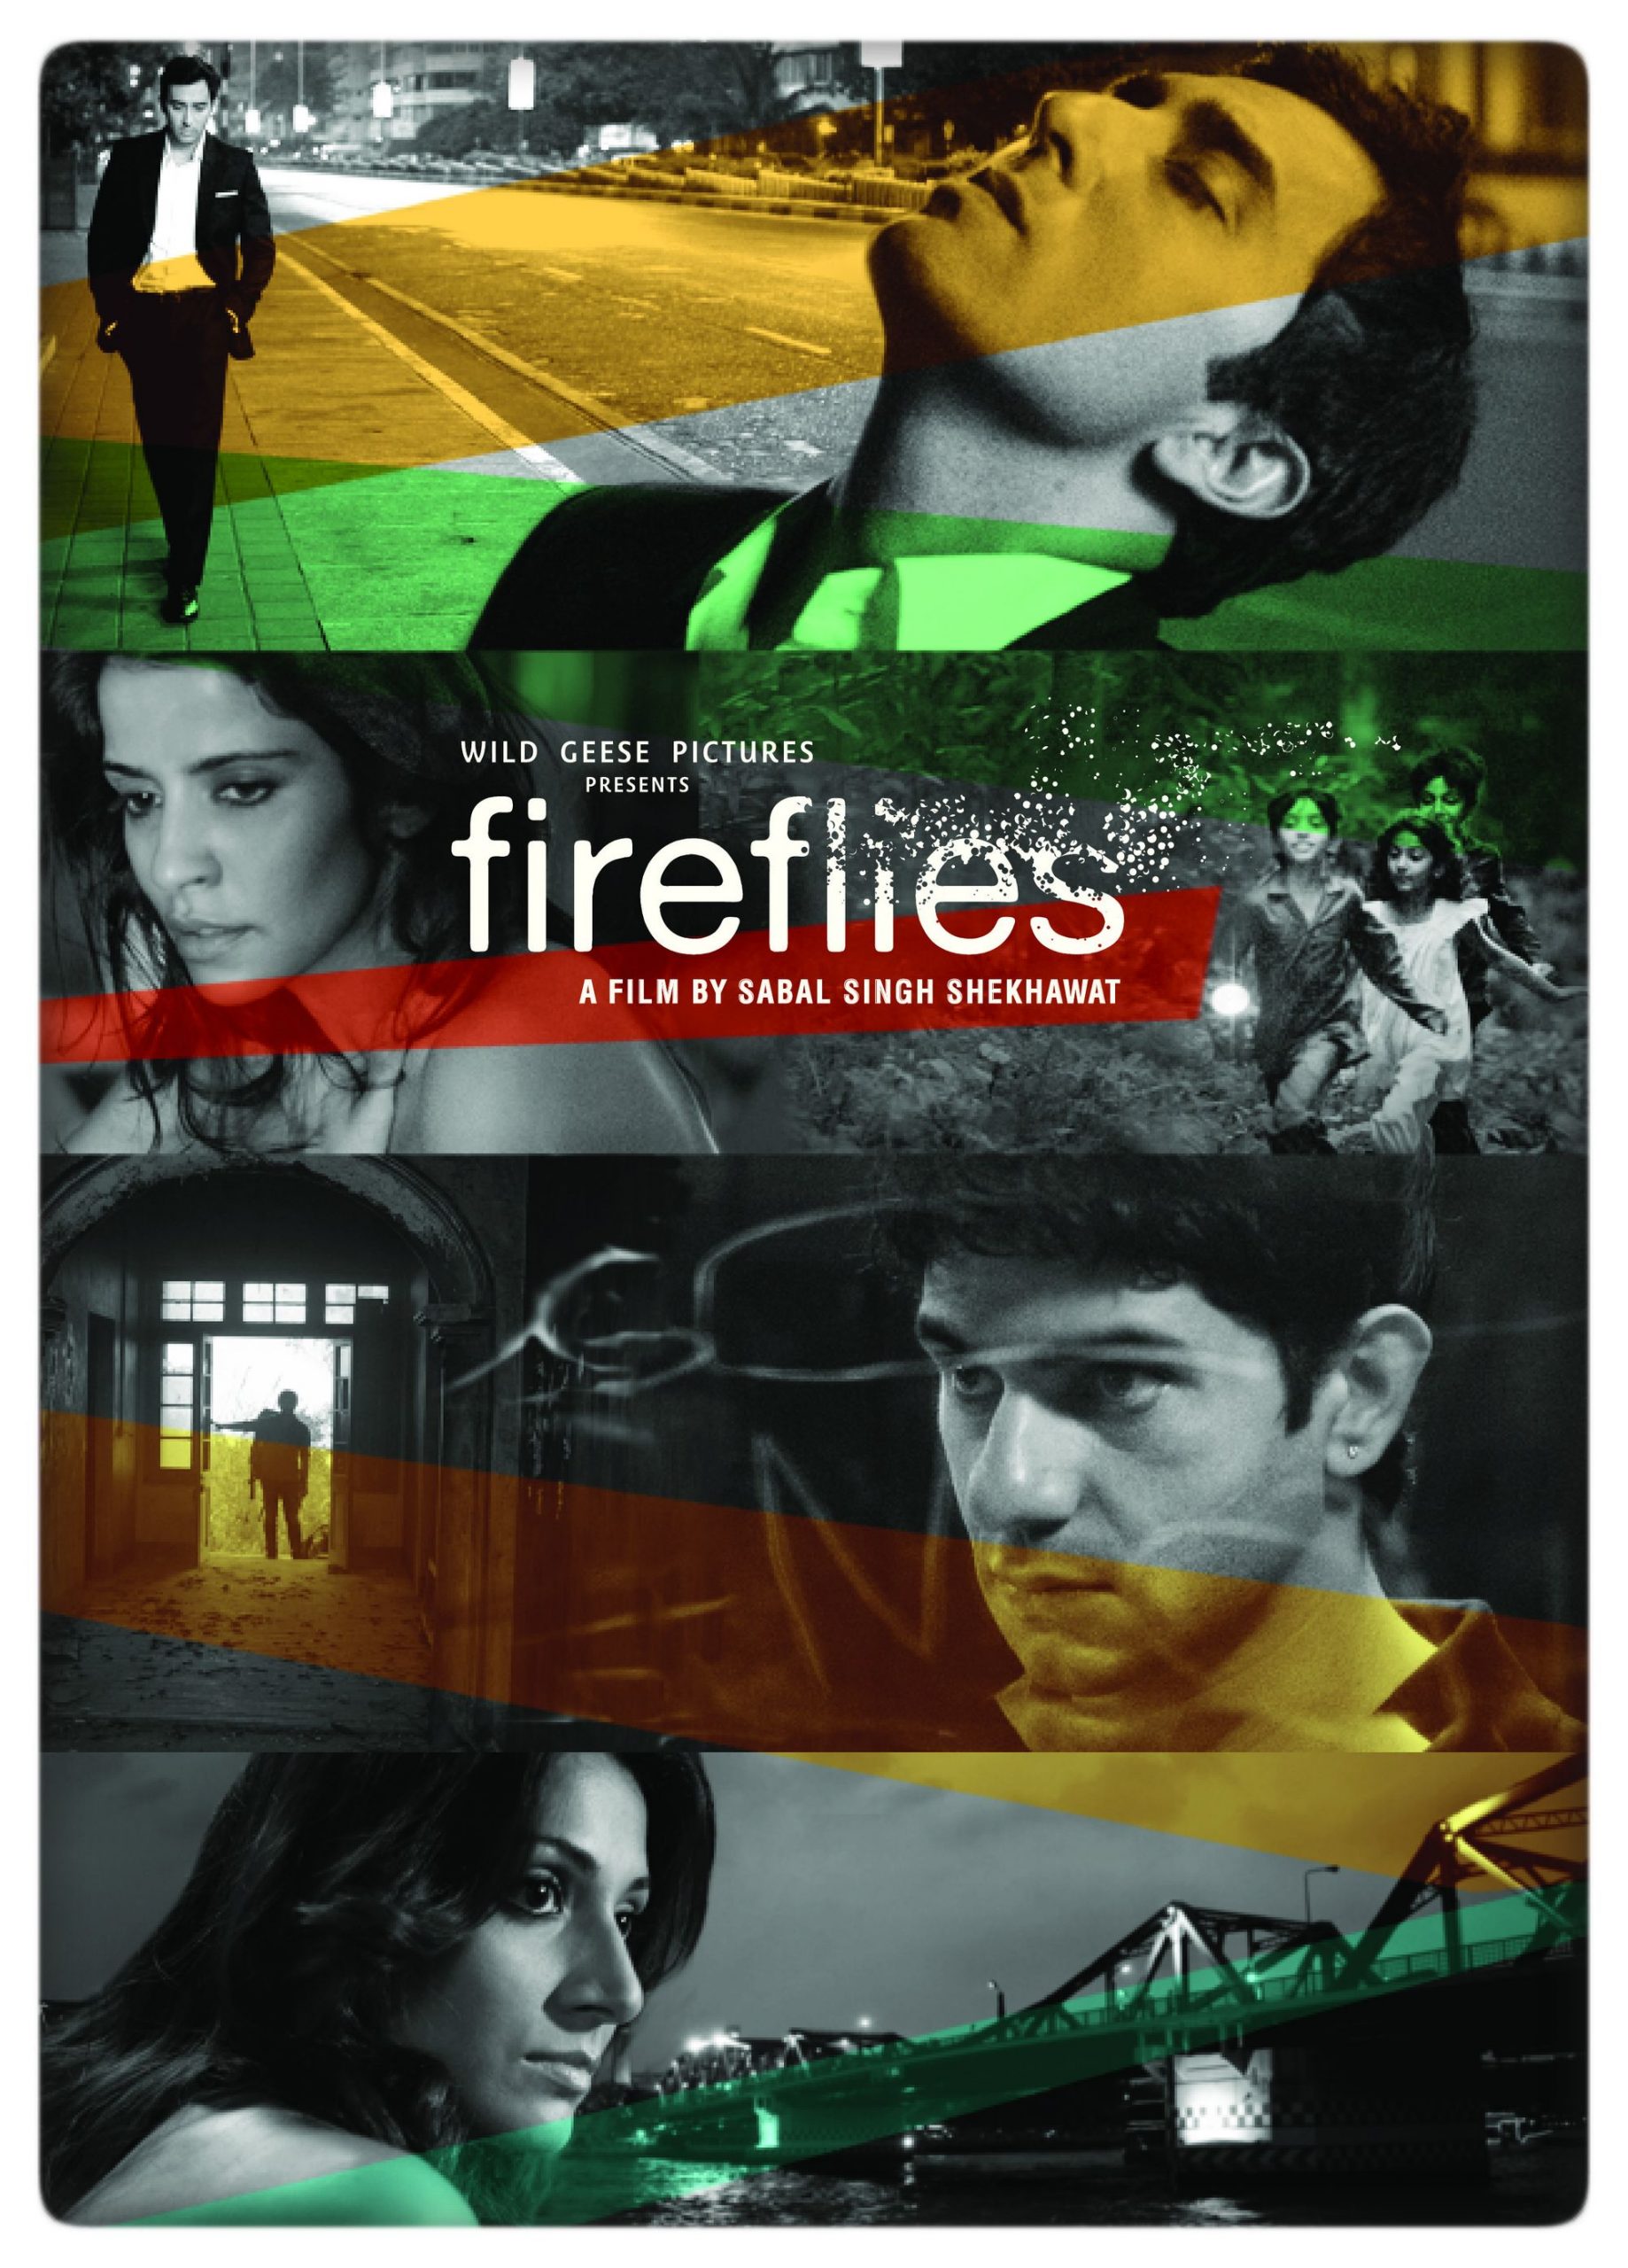 "Fireflies" movie poster